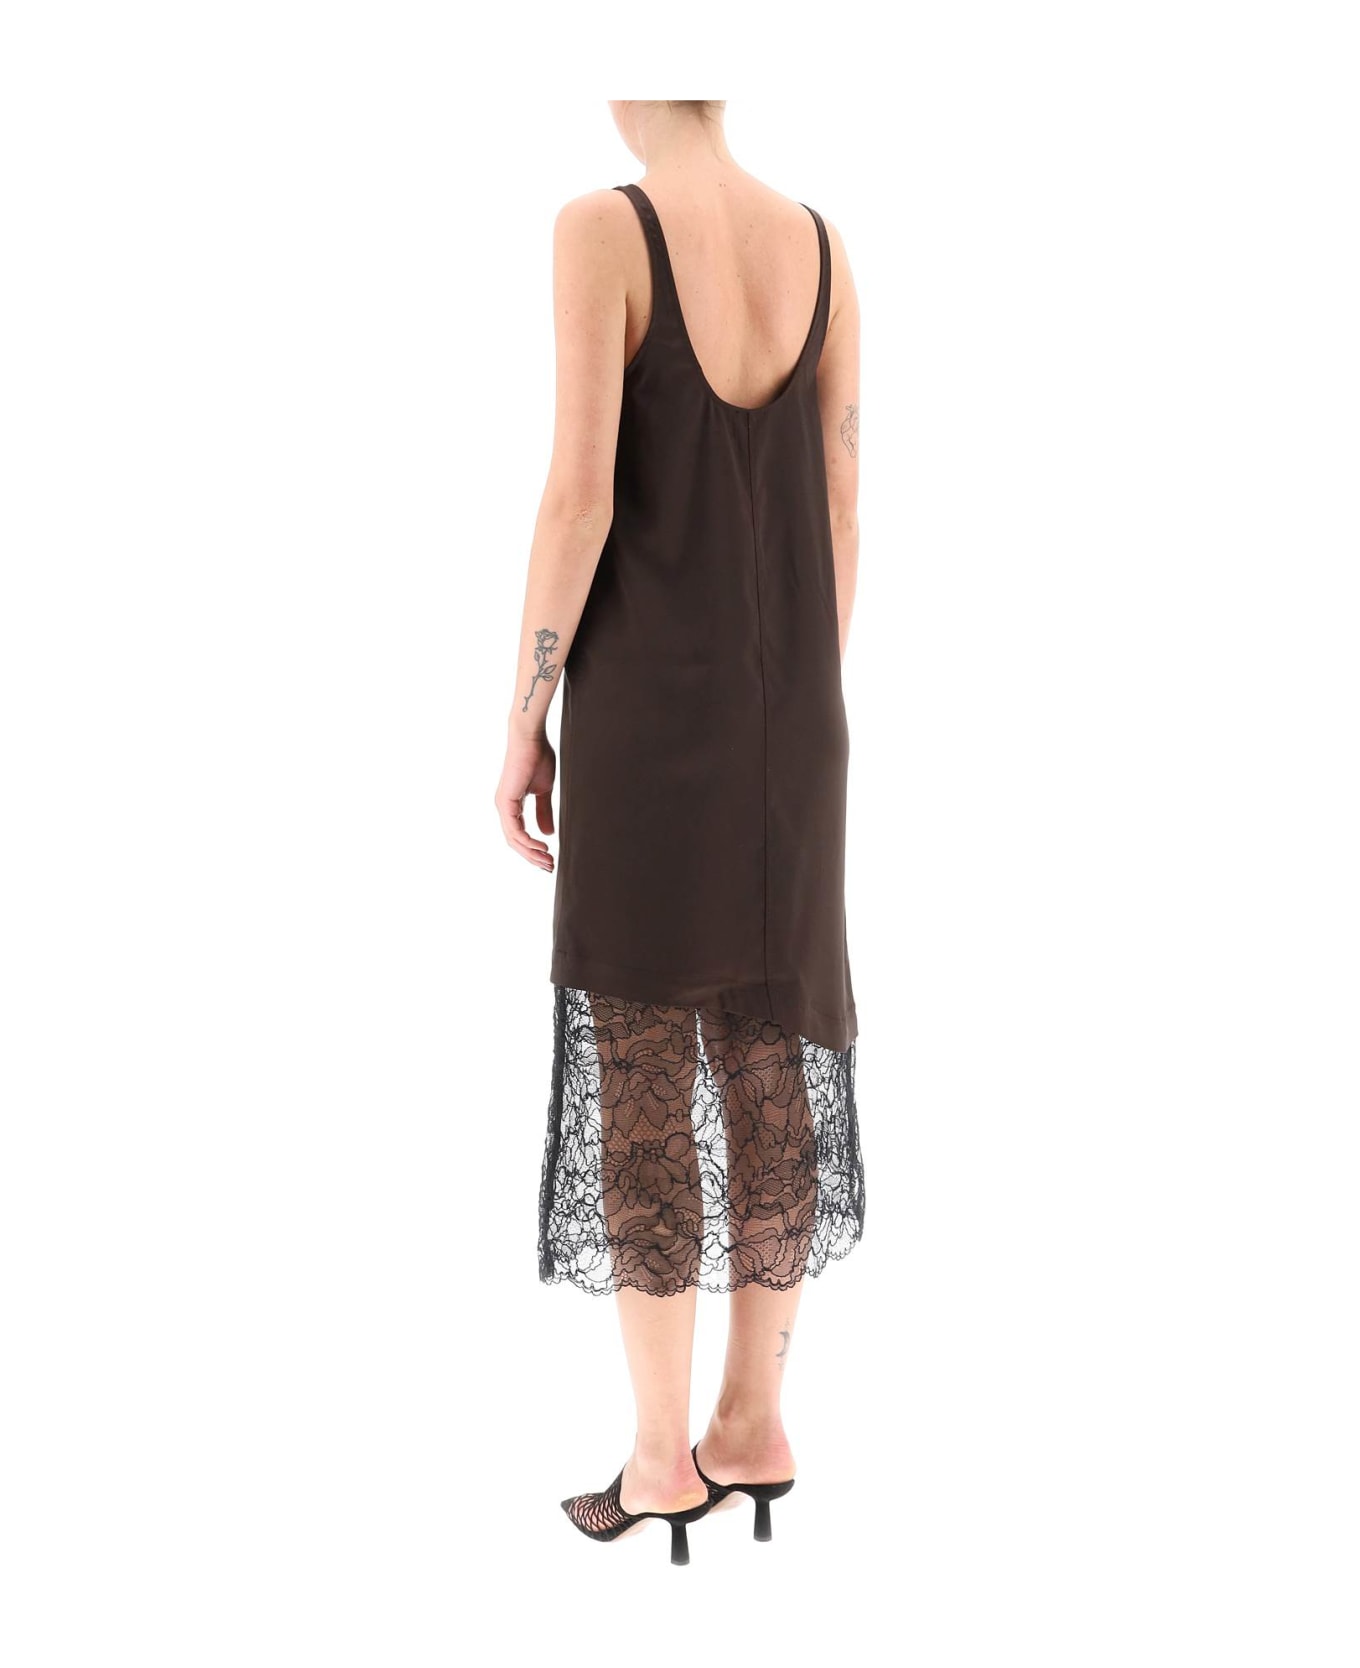 Ganni Satin Slip Dress With Lace Insert - MOLE (Brown)